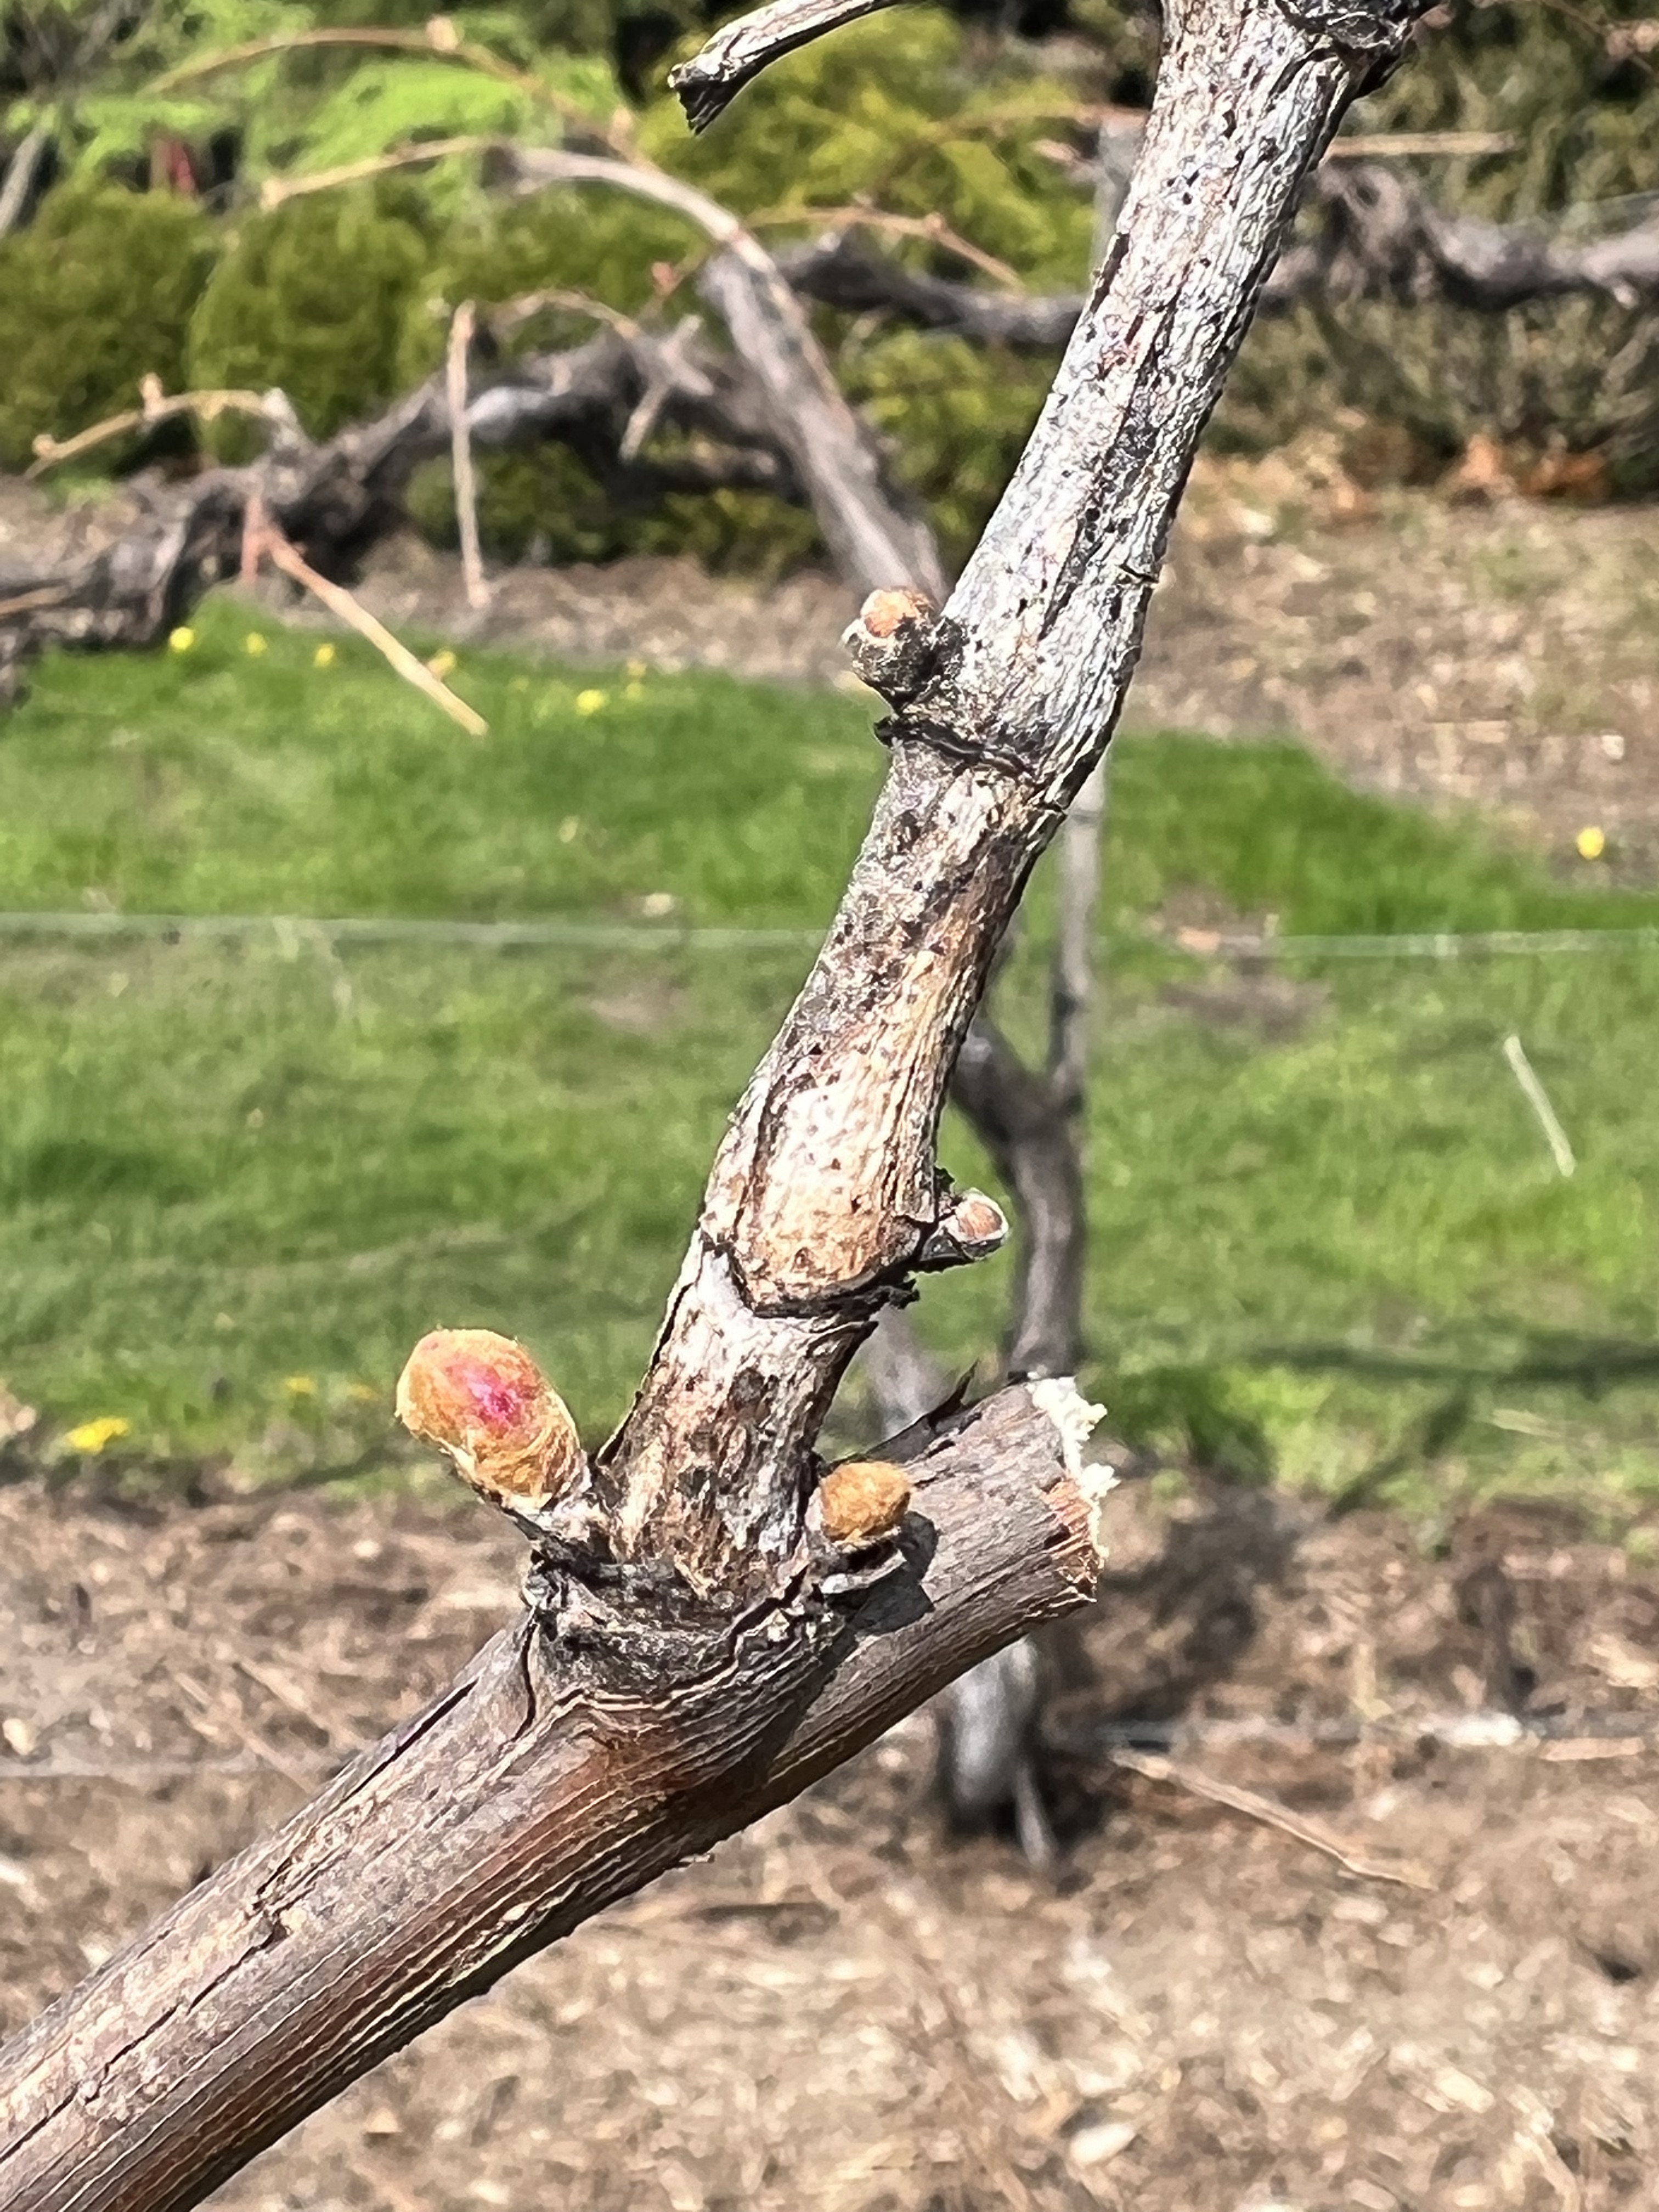 Phomopsis observed on hybrid wine grapes